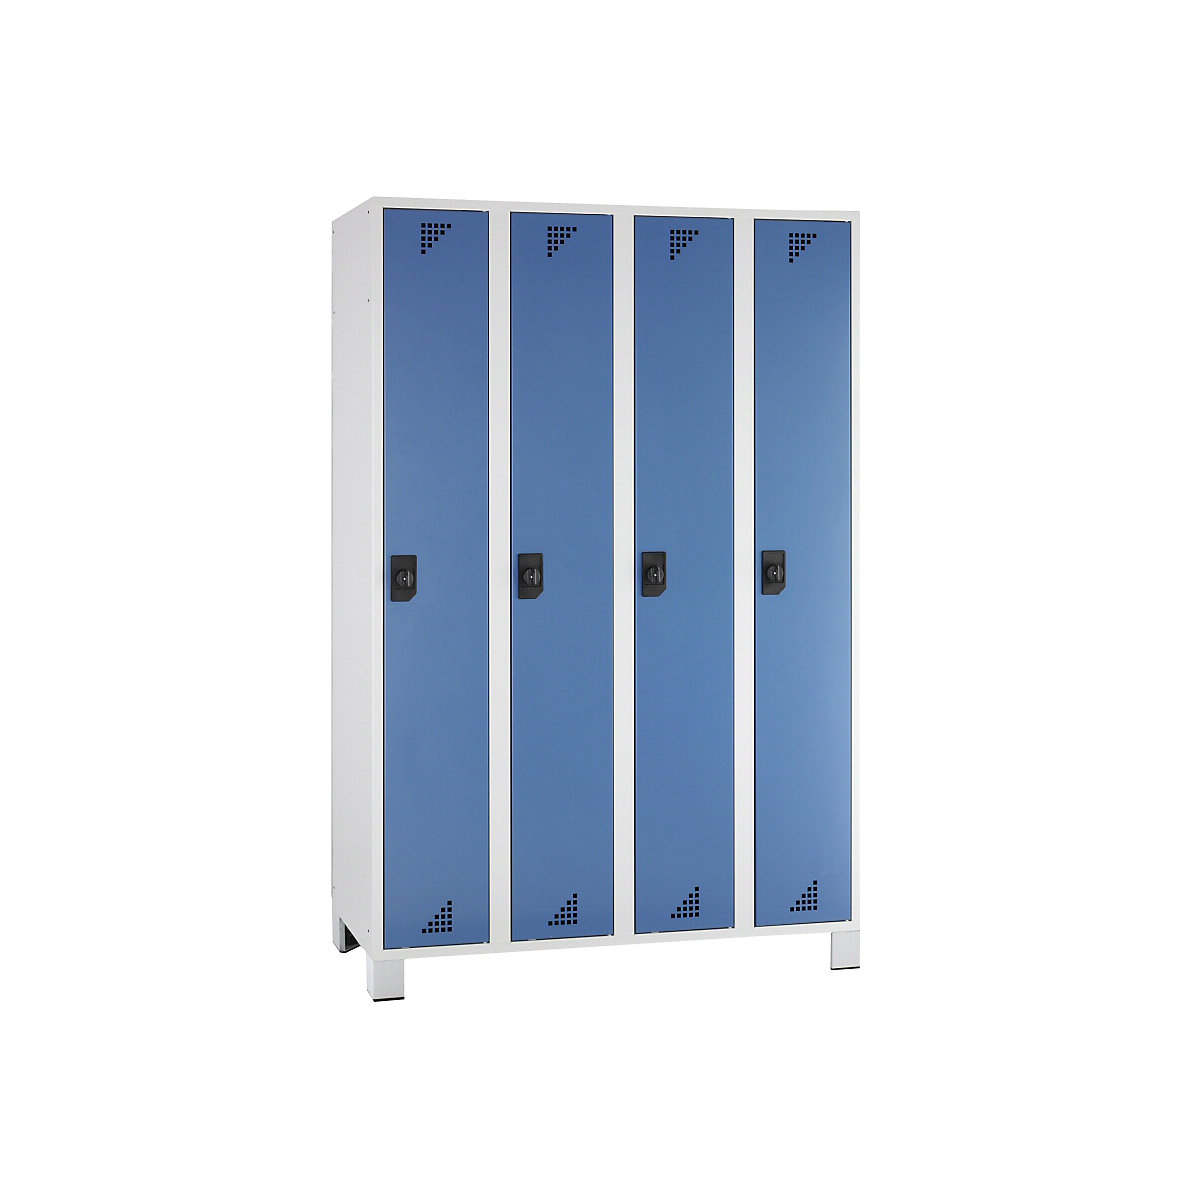 Multi-purpose cupboard and cloakroom locker – eurokraft pro, locker height 1695 mm, 4 compartments, width 1200 mm, light grey body, brilliant blue doors